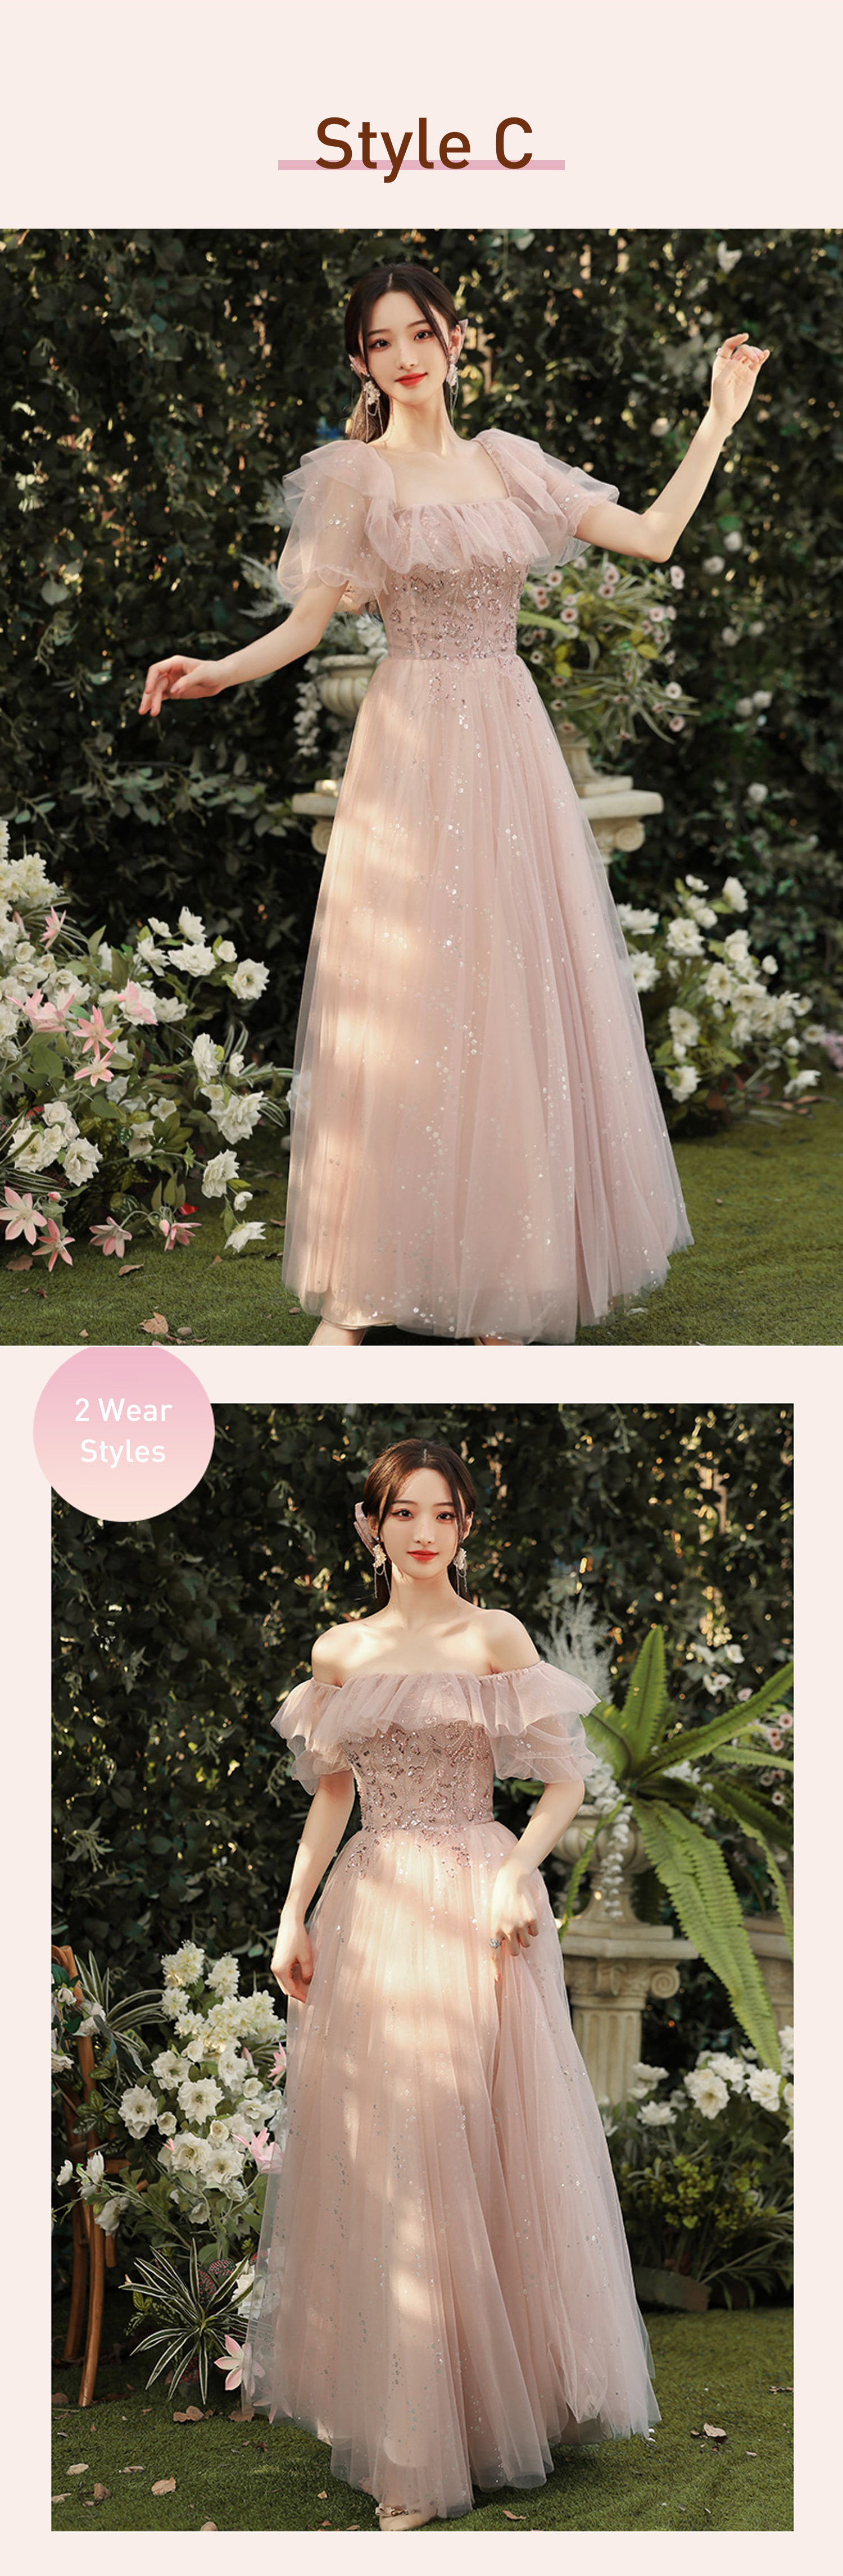 Aesthetic-Pink-Bridal-Wedding-Party-Bridesmaid-Long-Maxi-Dress23.jpg